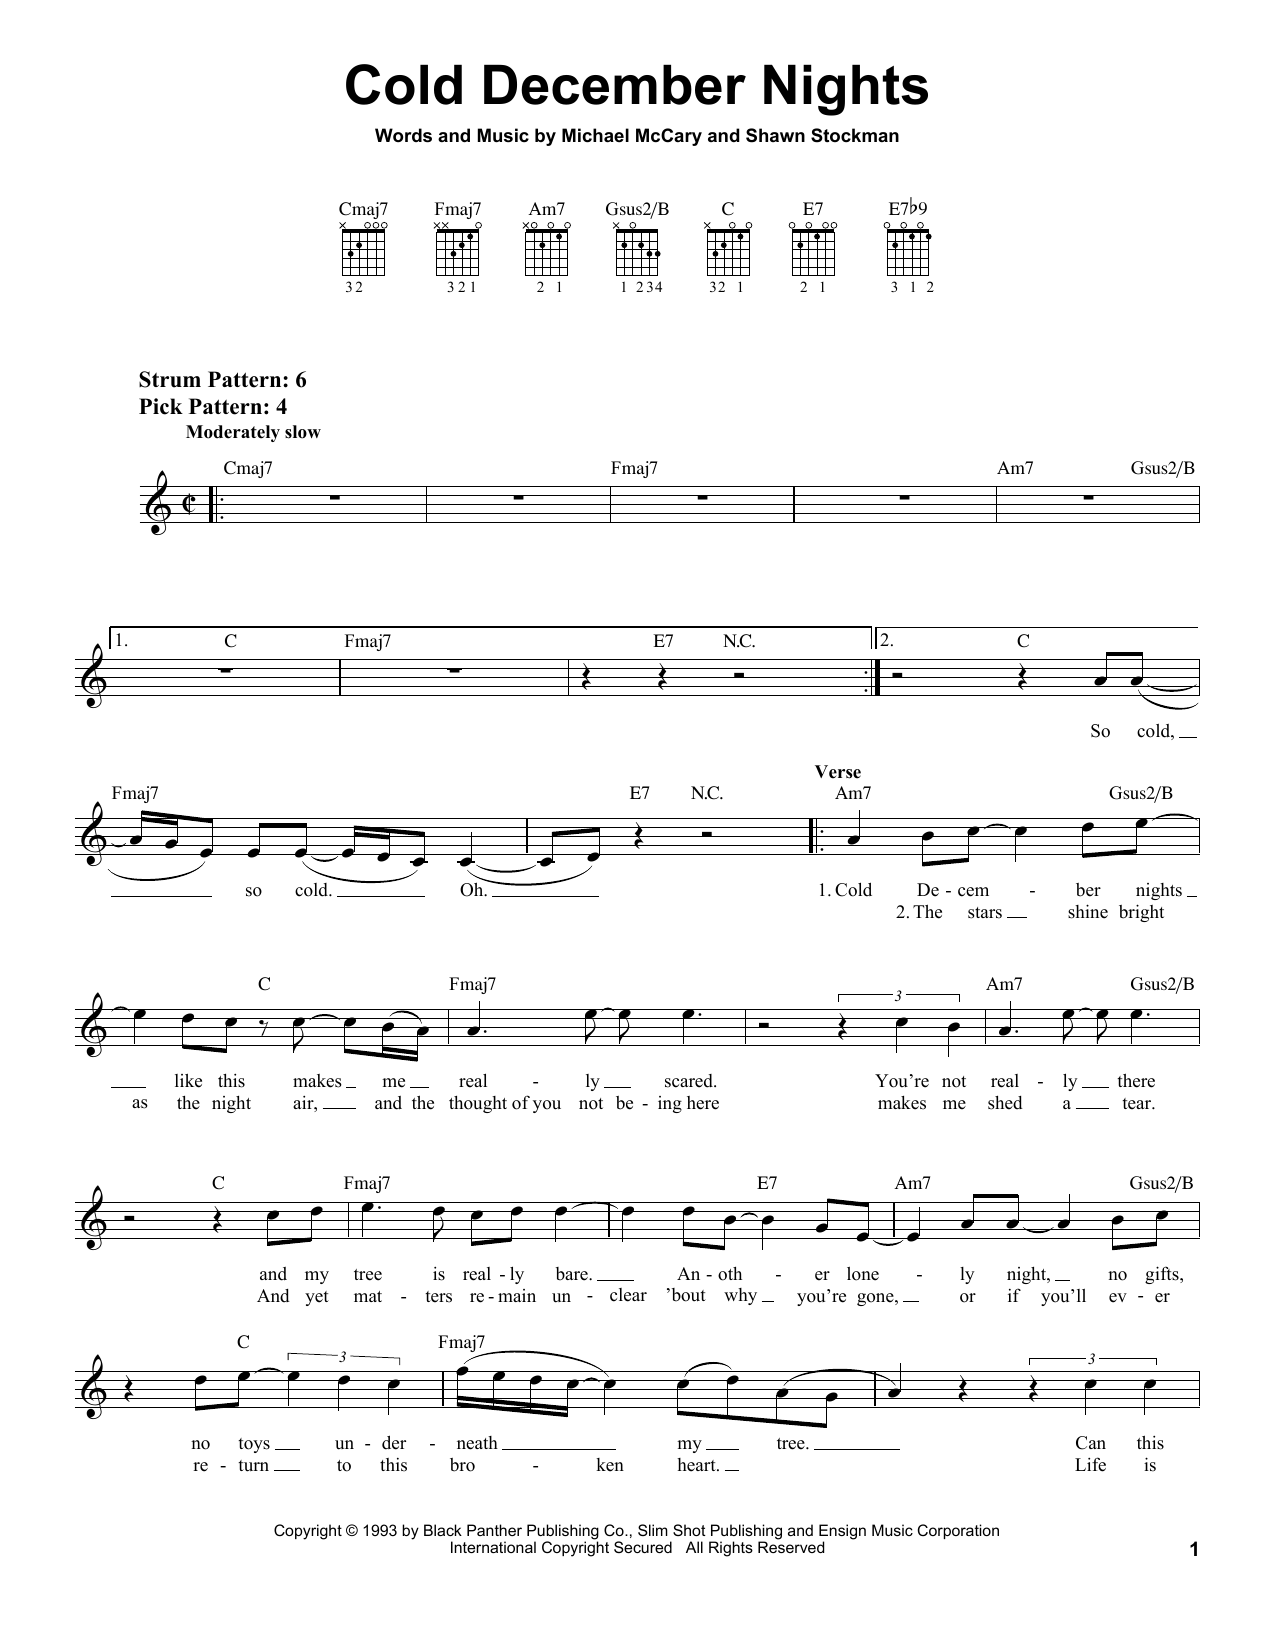 Boyz II Men Cold December Nights Sheet Music Notes & Chords for Trumpet - Download or Print PDF